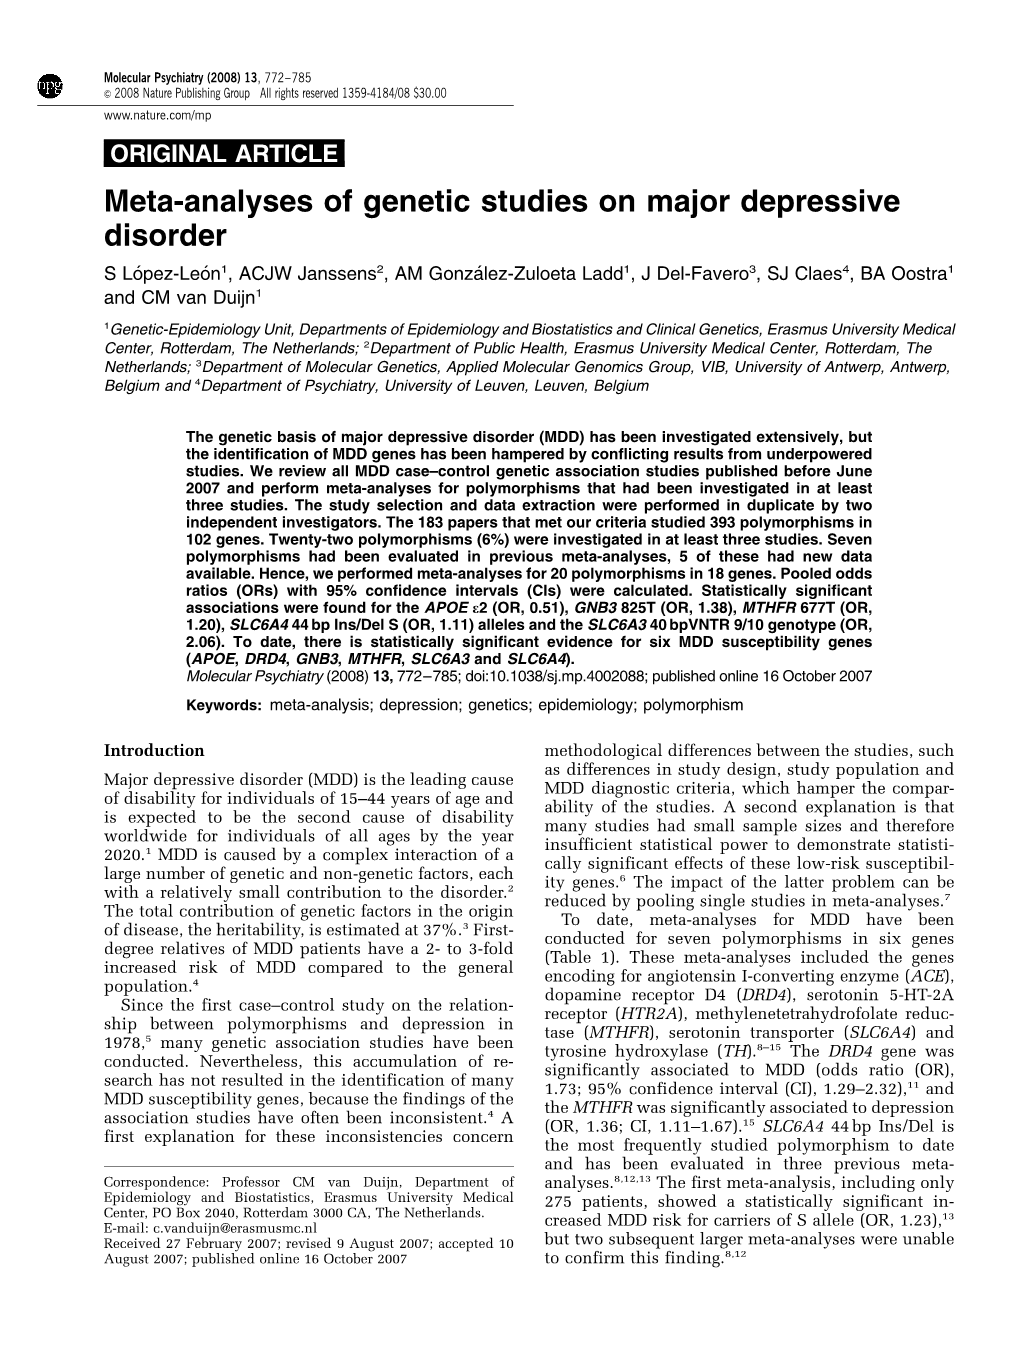 Meta-Analyses of Genetic Studies on Major Depressive Disorder